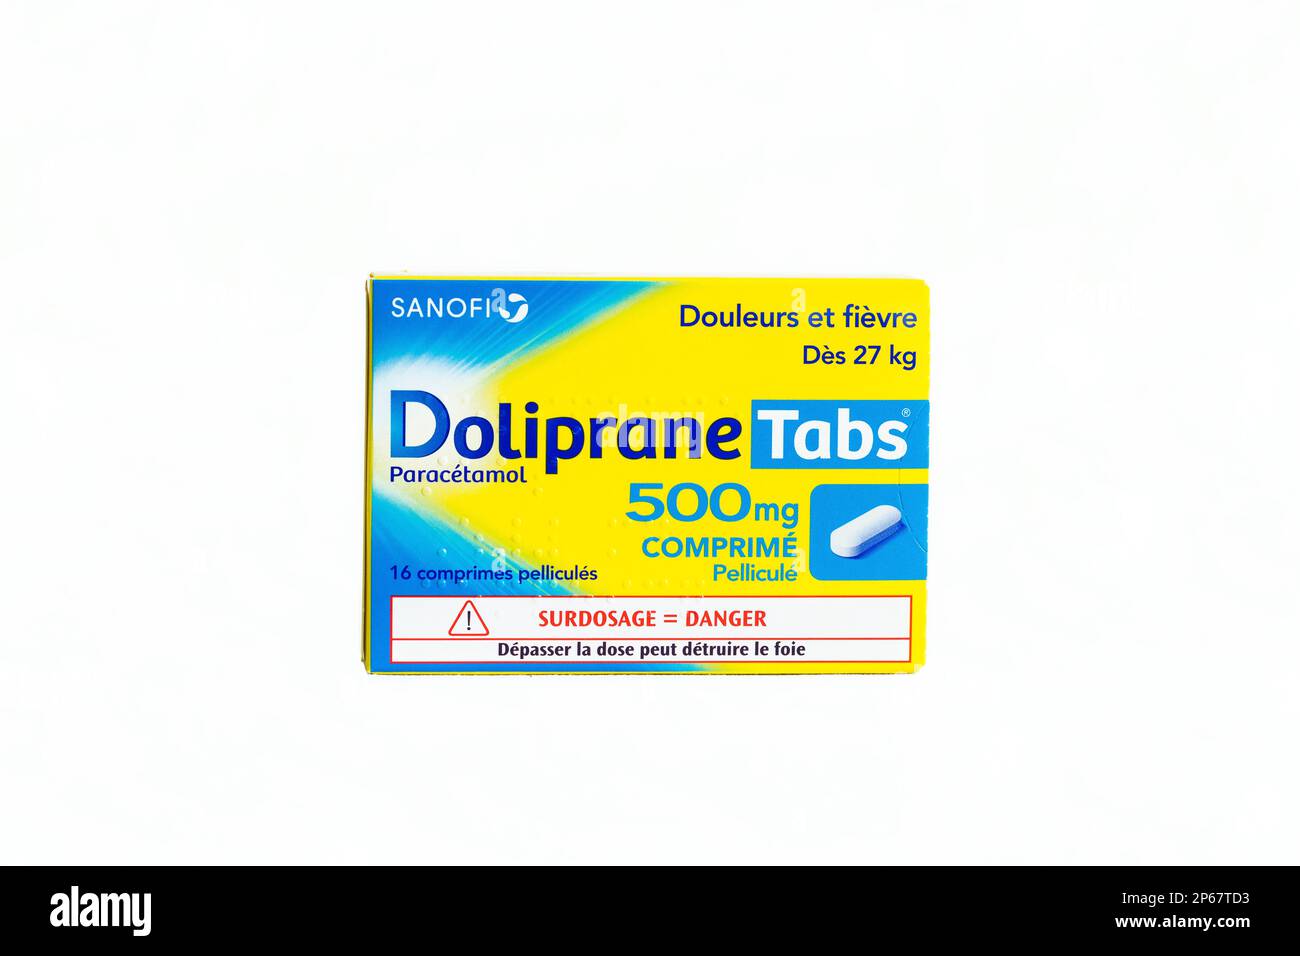 Doliprane 500 mg from Sanofi, Paracetamol tablets painkiller Stock Photo